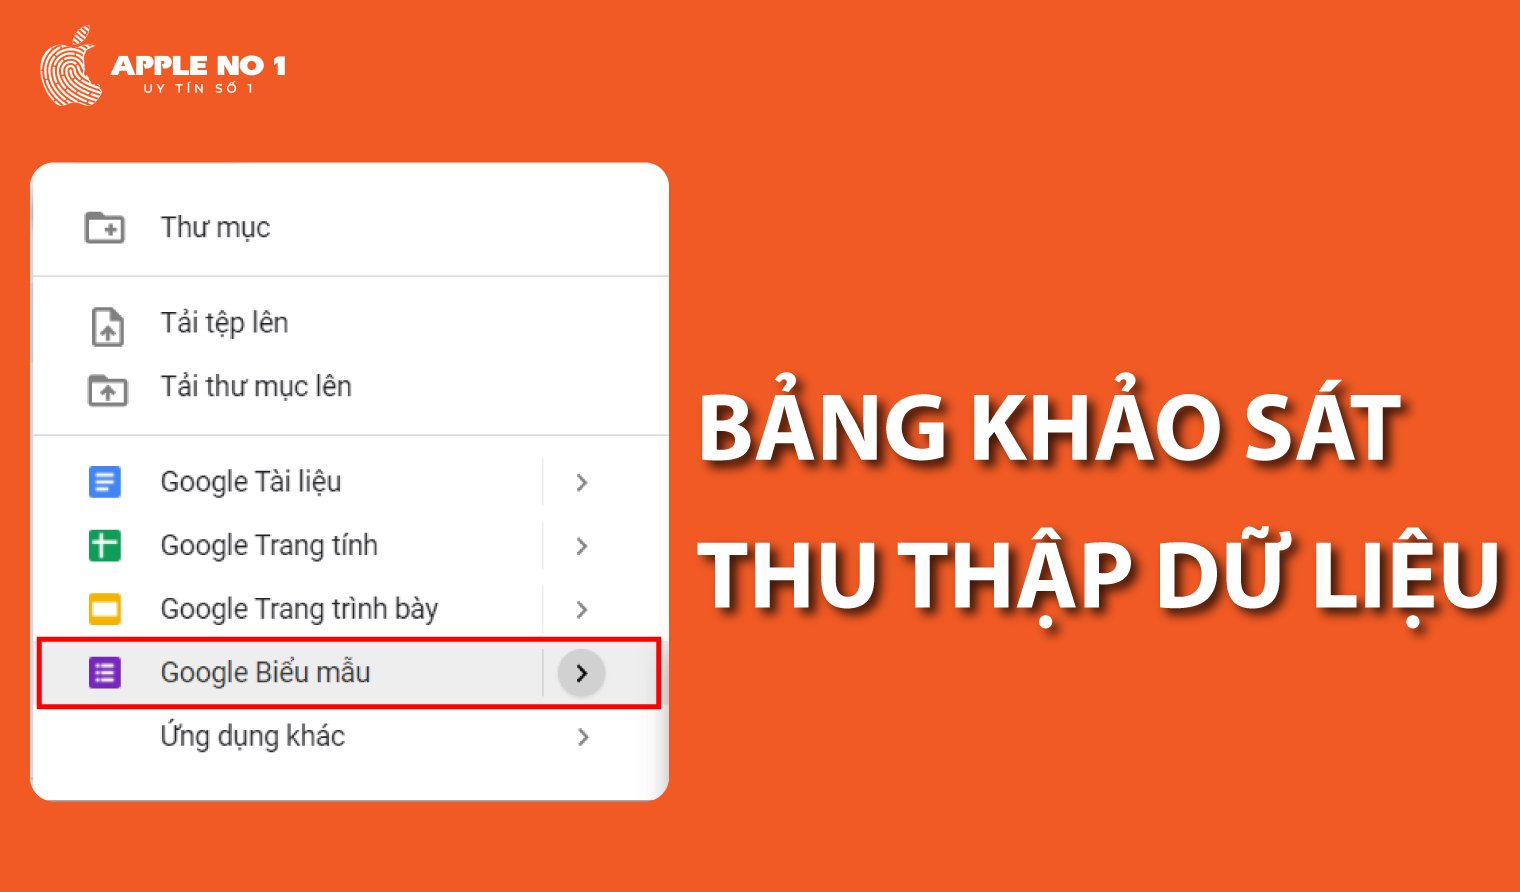 tao bang khao sat, thu thap du lieu